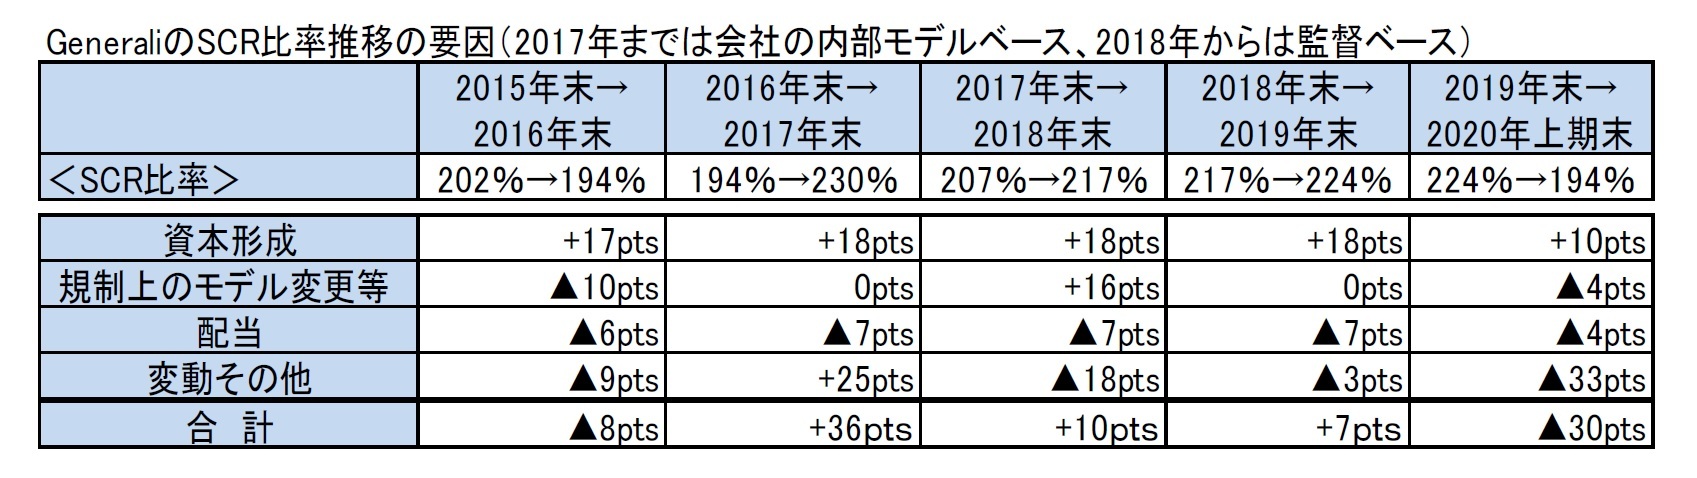 GeneraliのSCR比率推移の要因（2017年までは会社の内部モデルベース、2018年からは監督ベース）